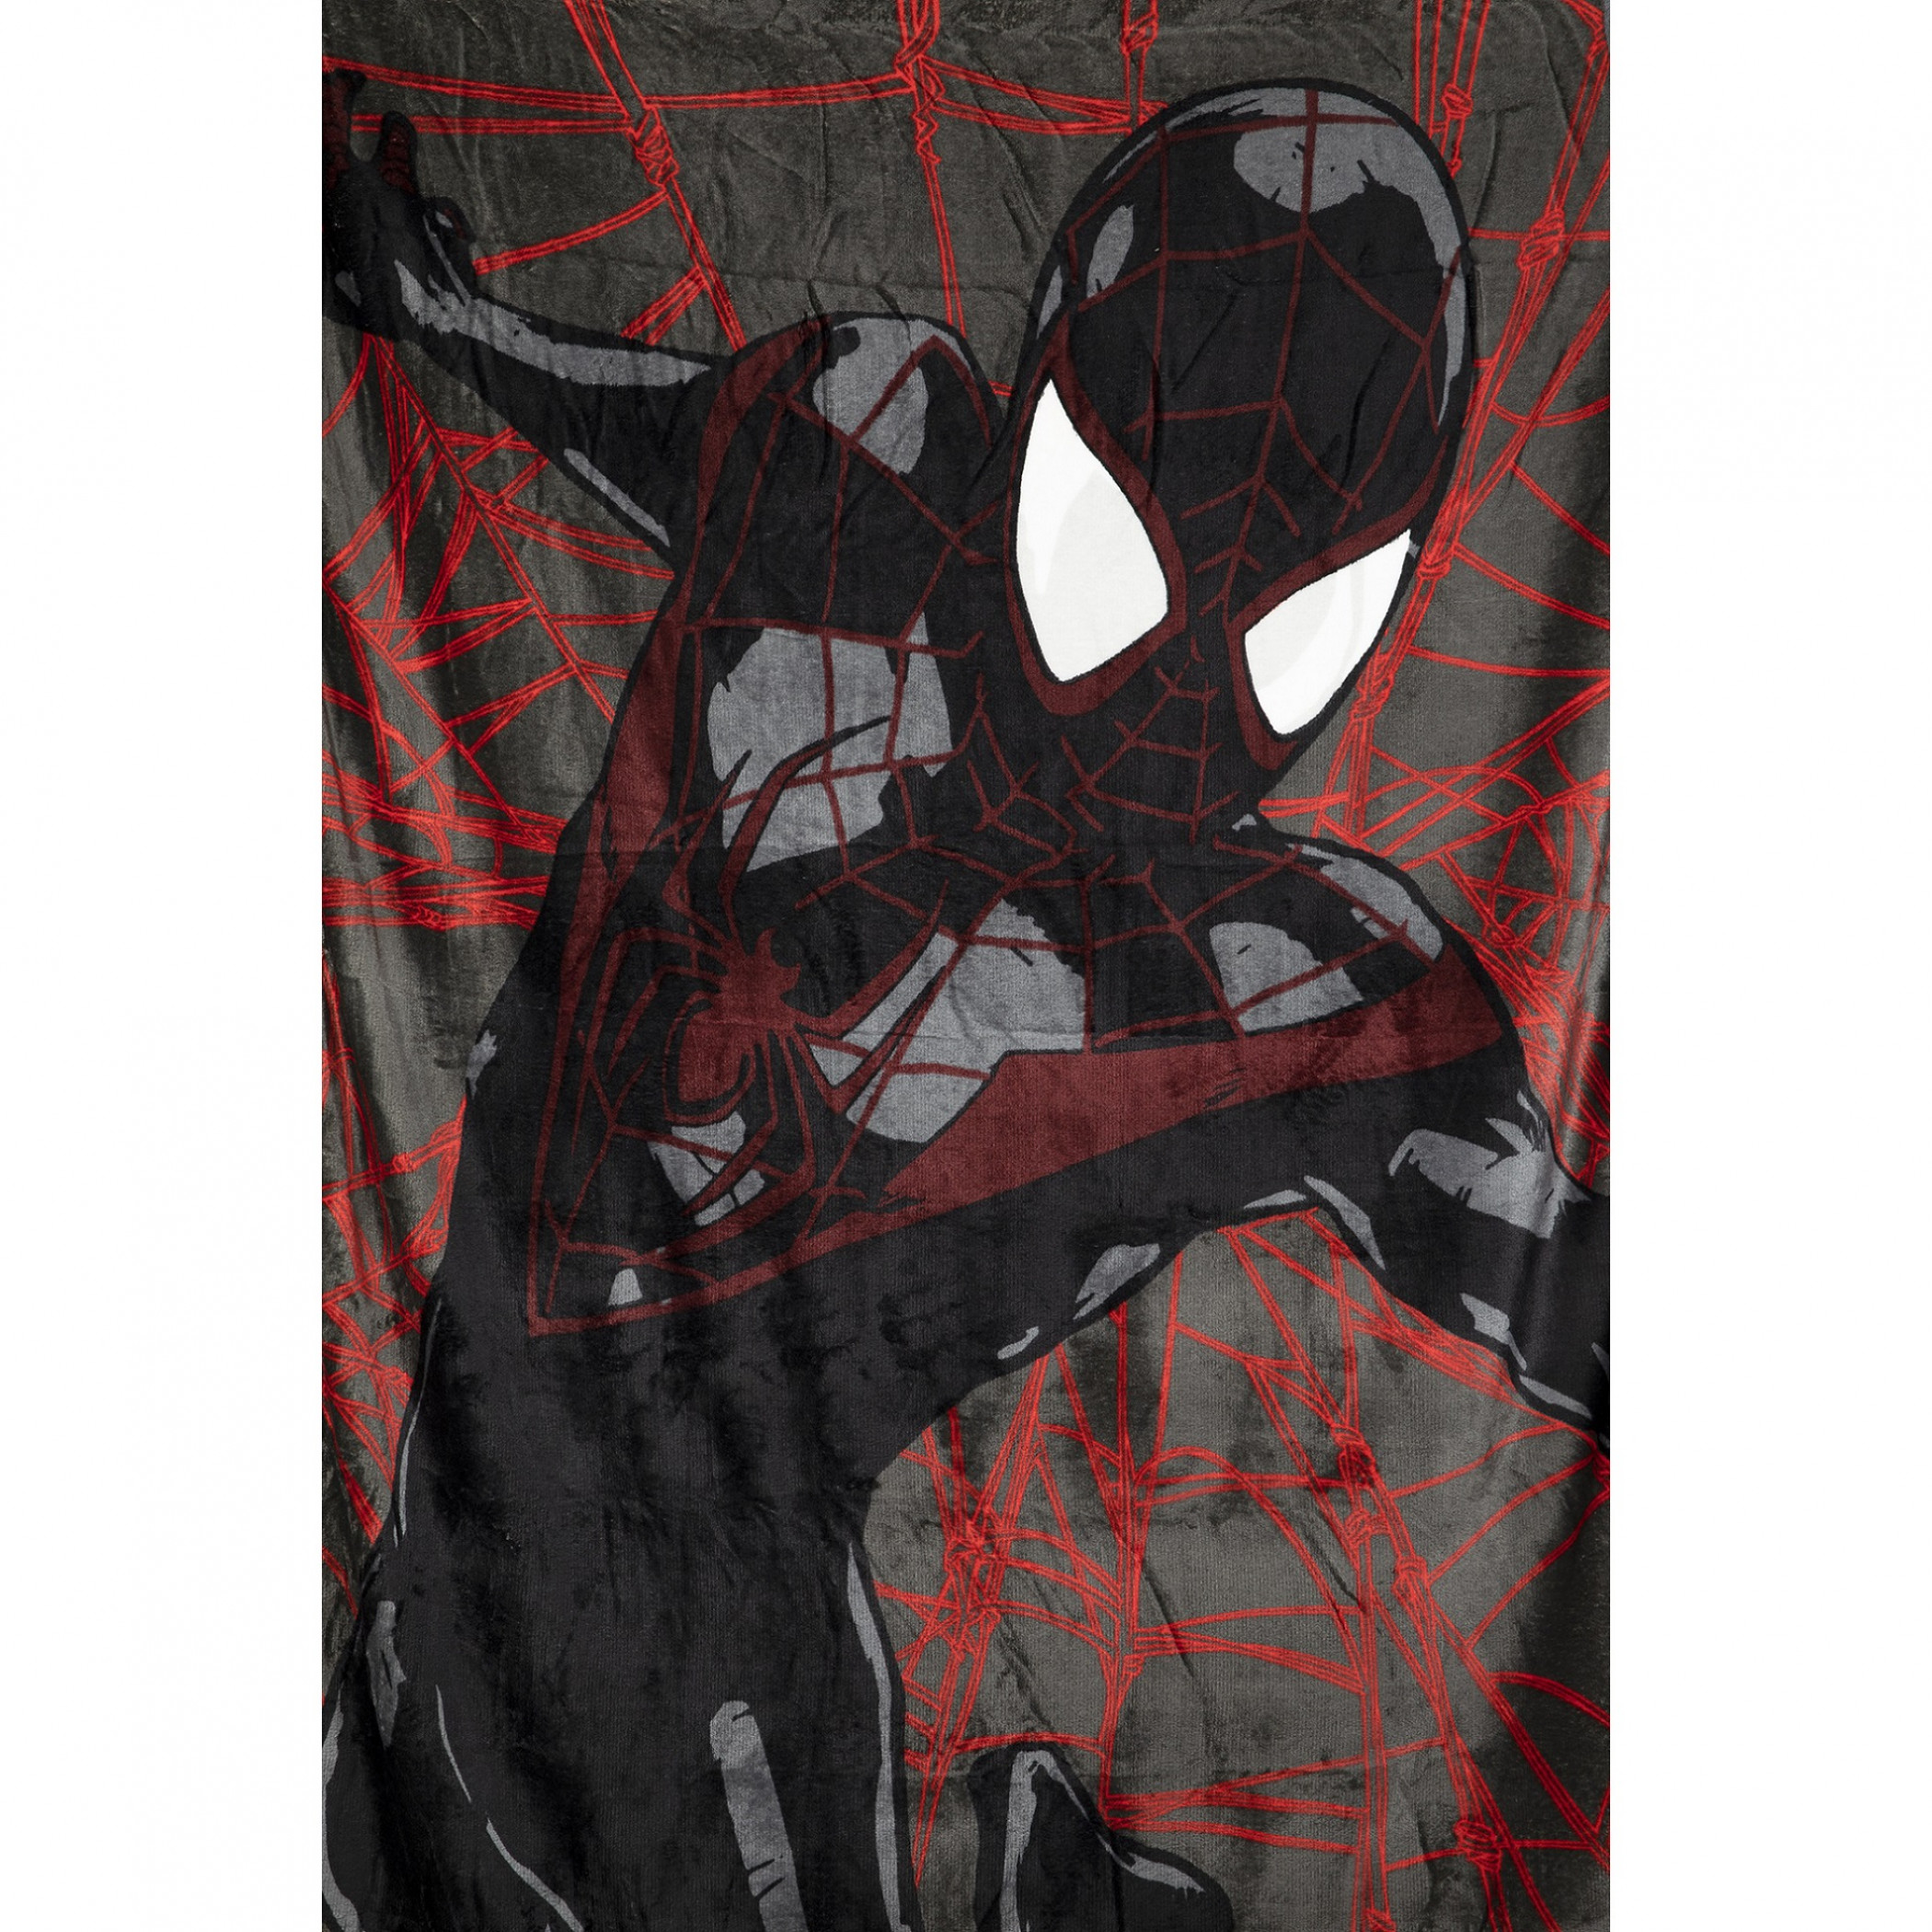 Marvel Miles Morales Spider-Man Webs New Kids Throw Blanket